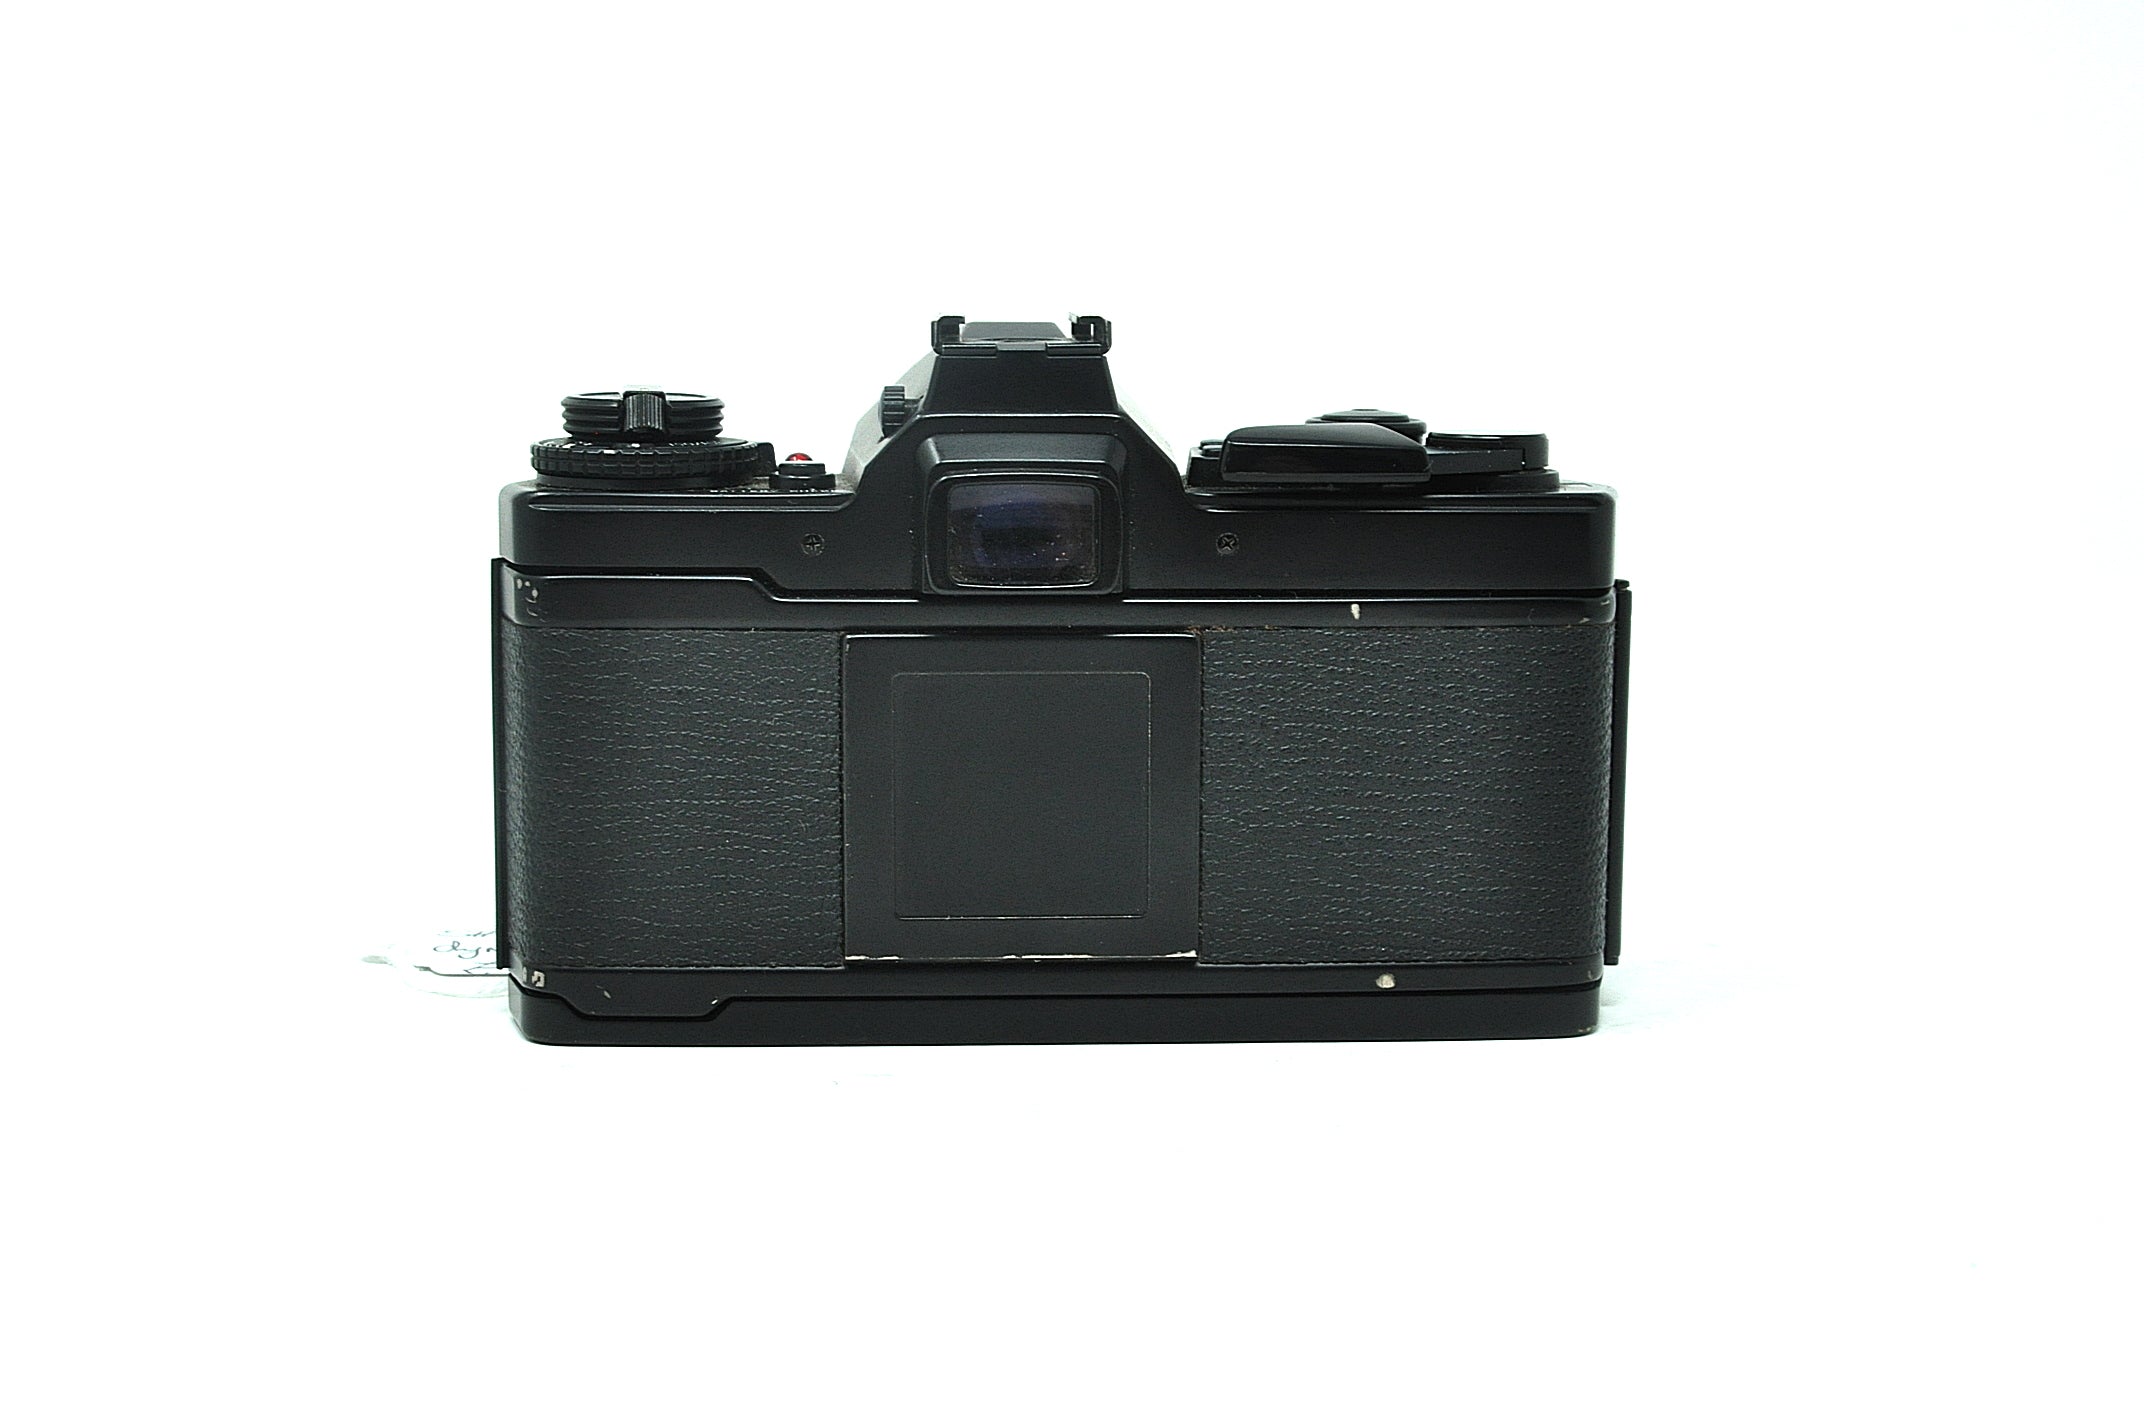 Used Olympus OM-3 Classic Film camera  (SH40060)